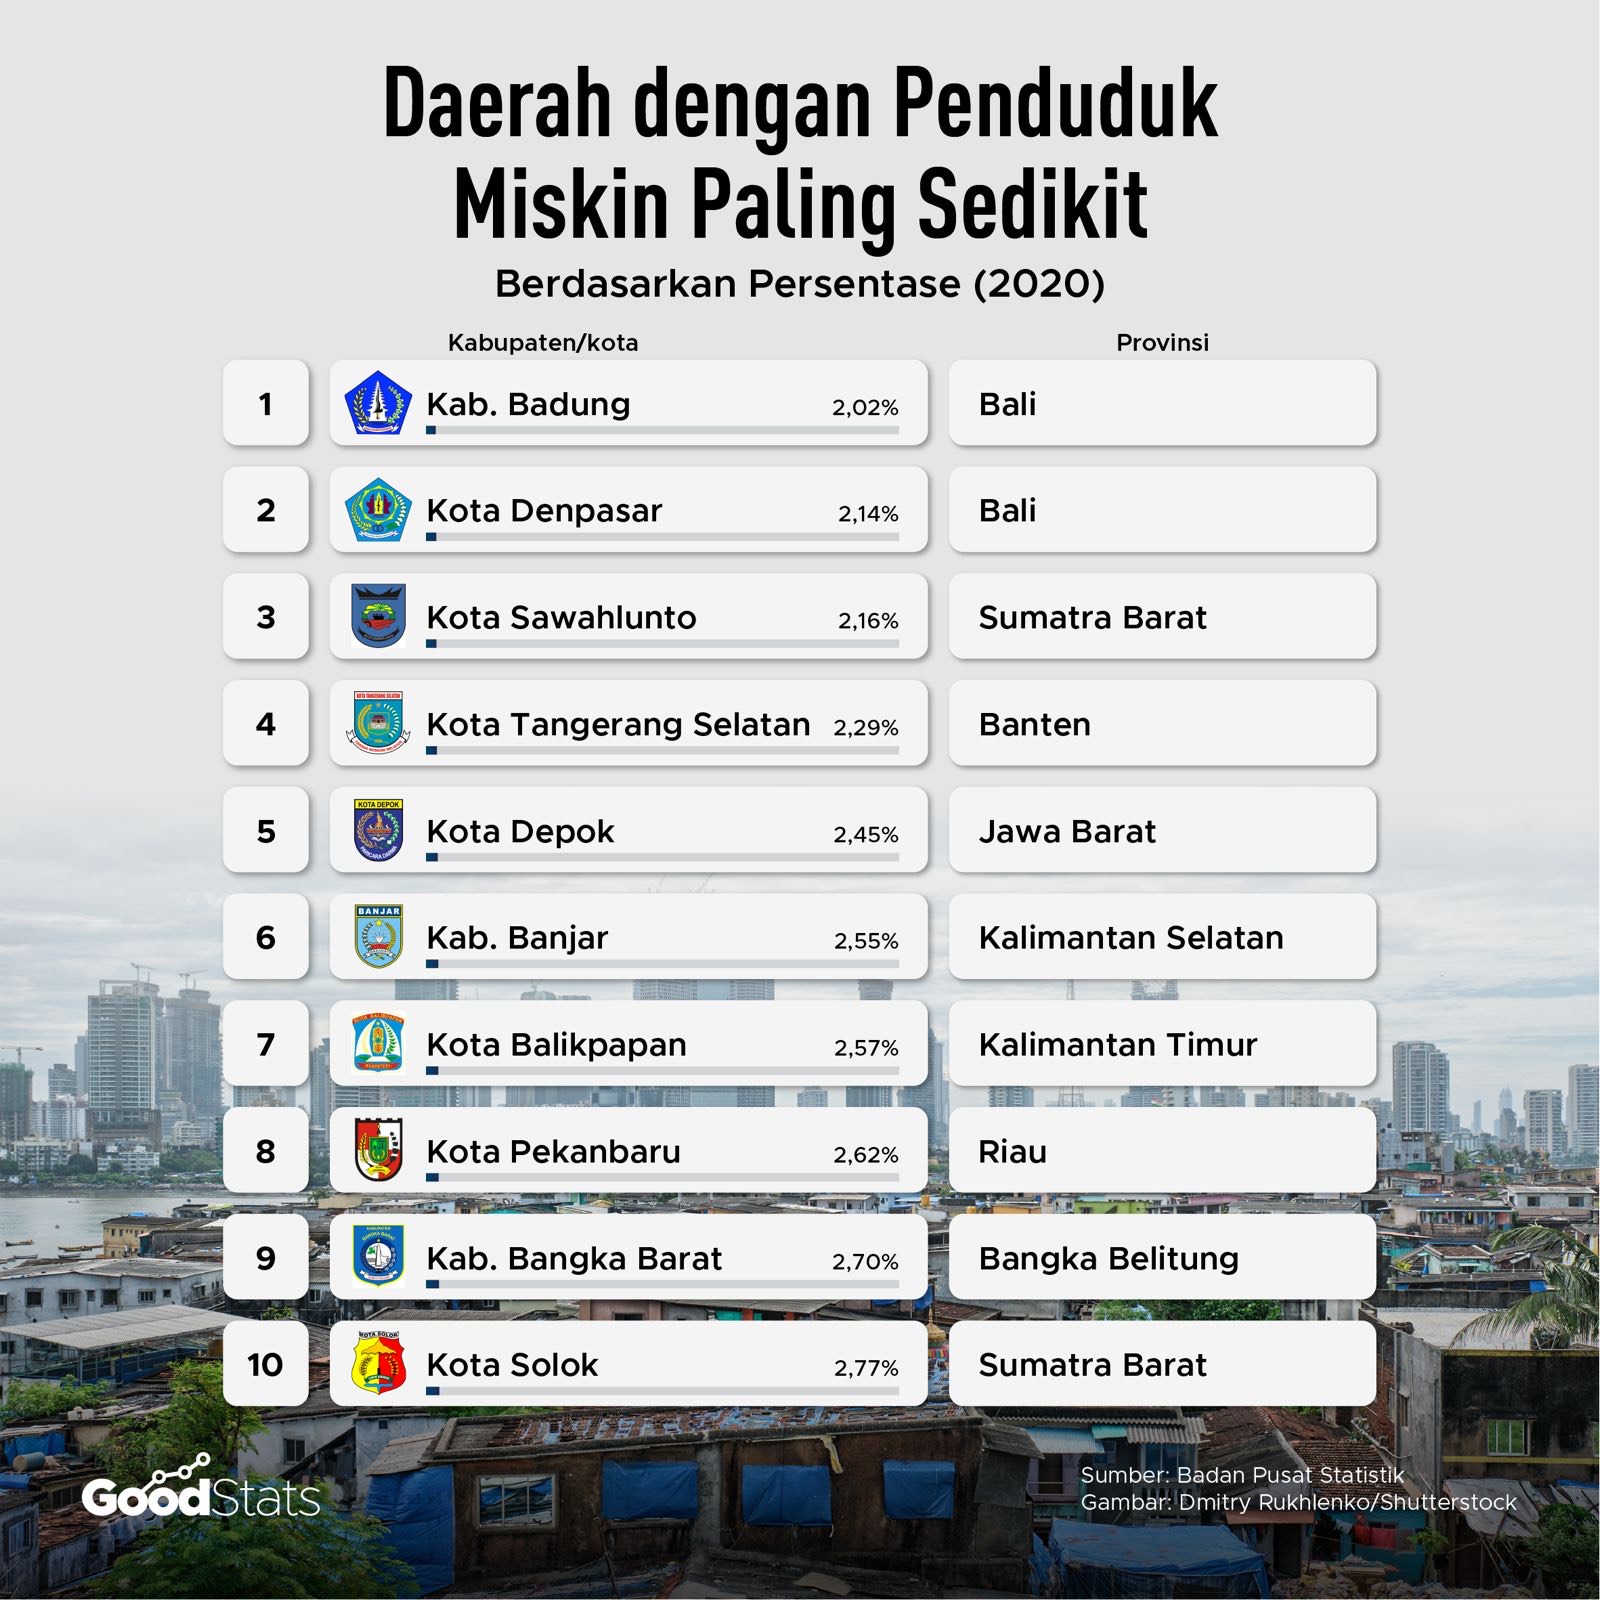 10 daerah dengan penduduk miskin paling sedikit di Indonesia tahun 2020 © Aghapier/GoodStats